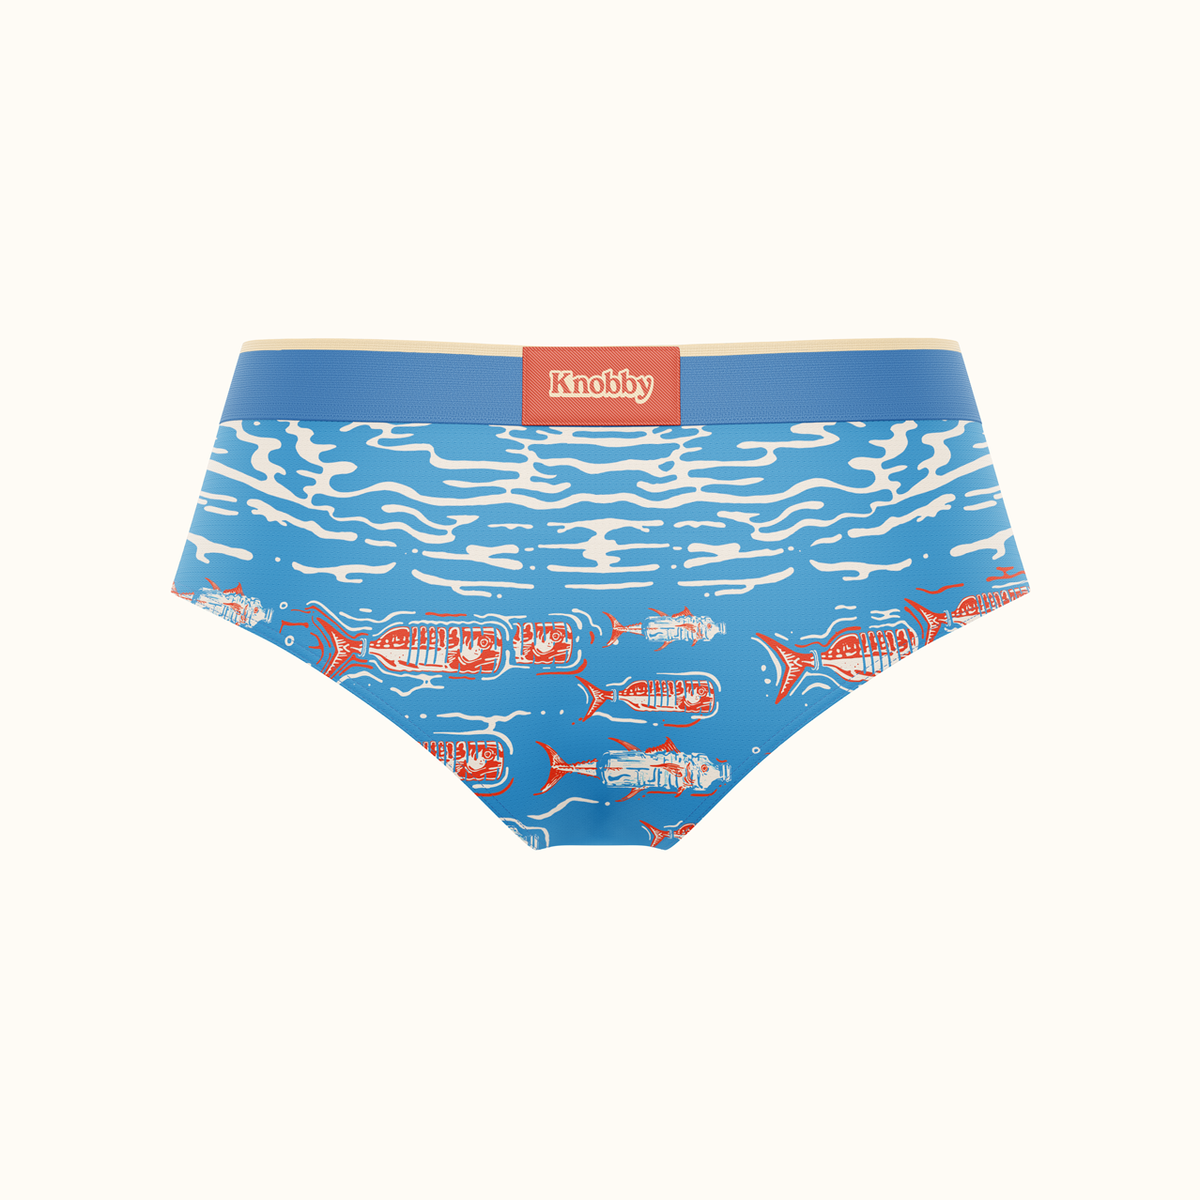 Knobby - We bring underwear to life! 🪐 A fresh new design